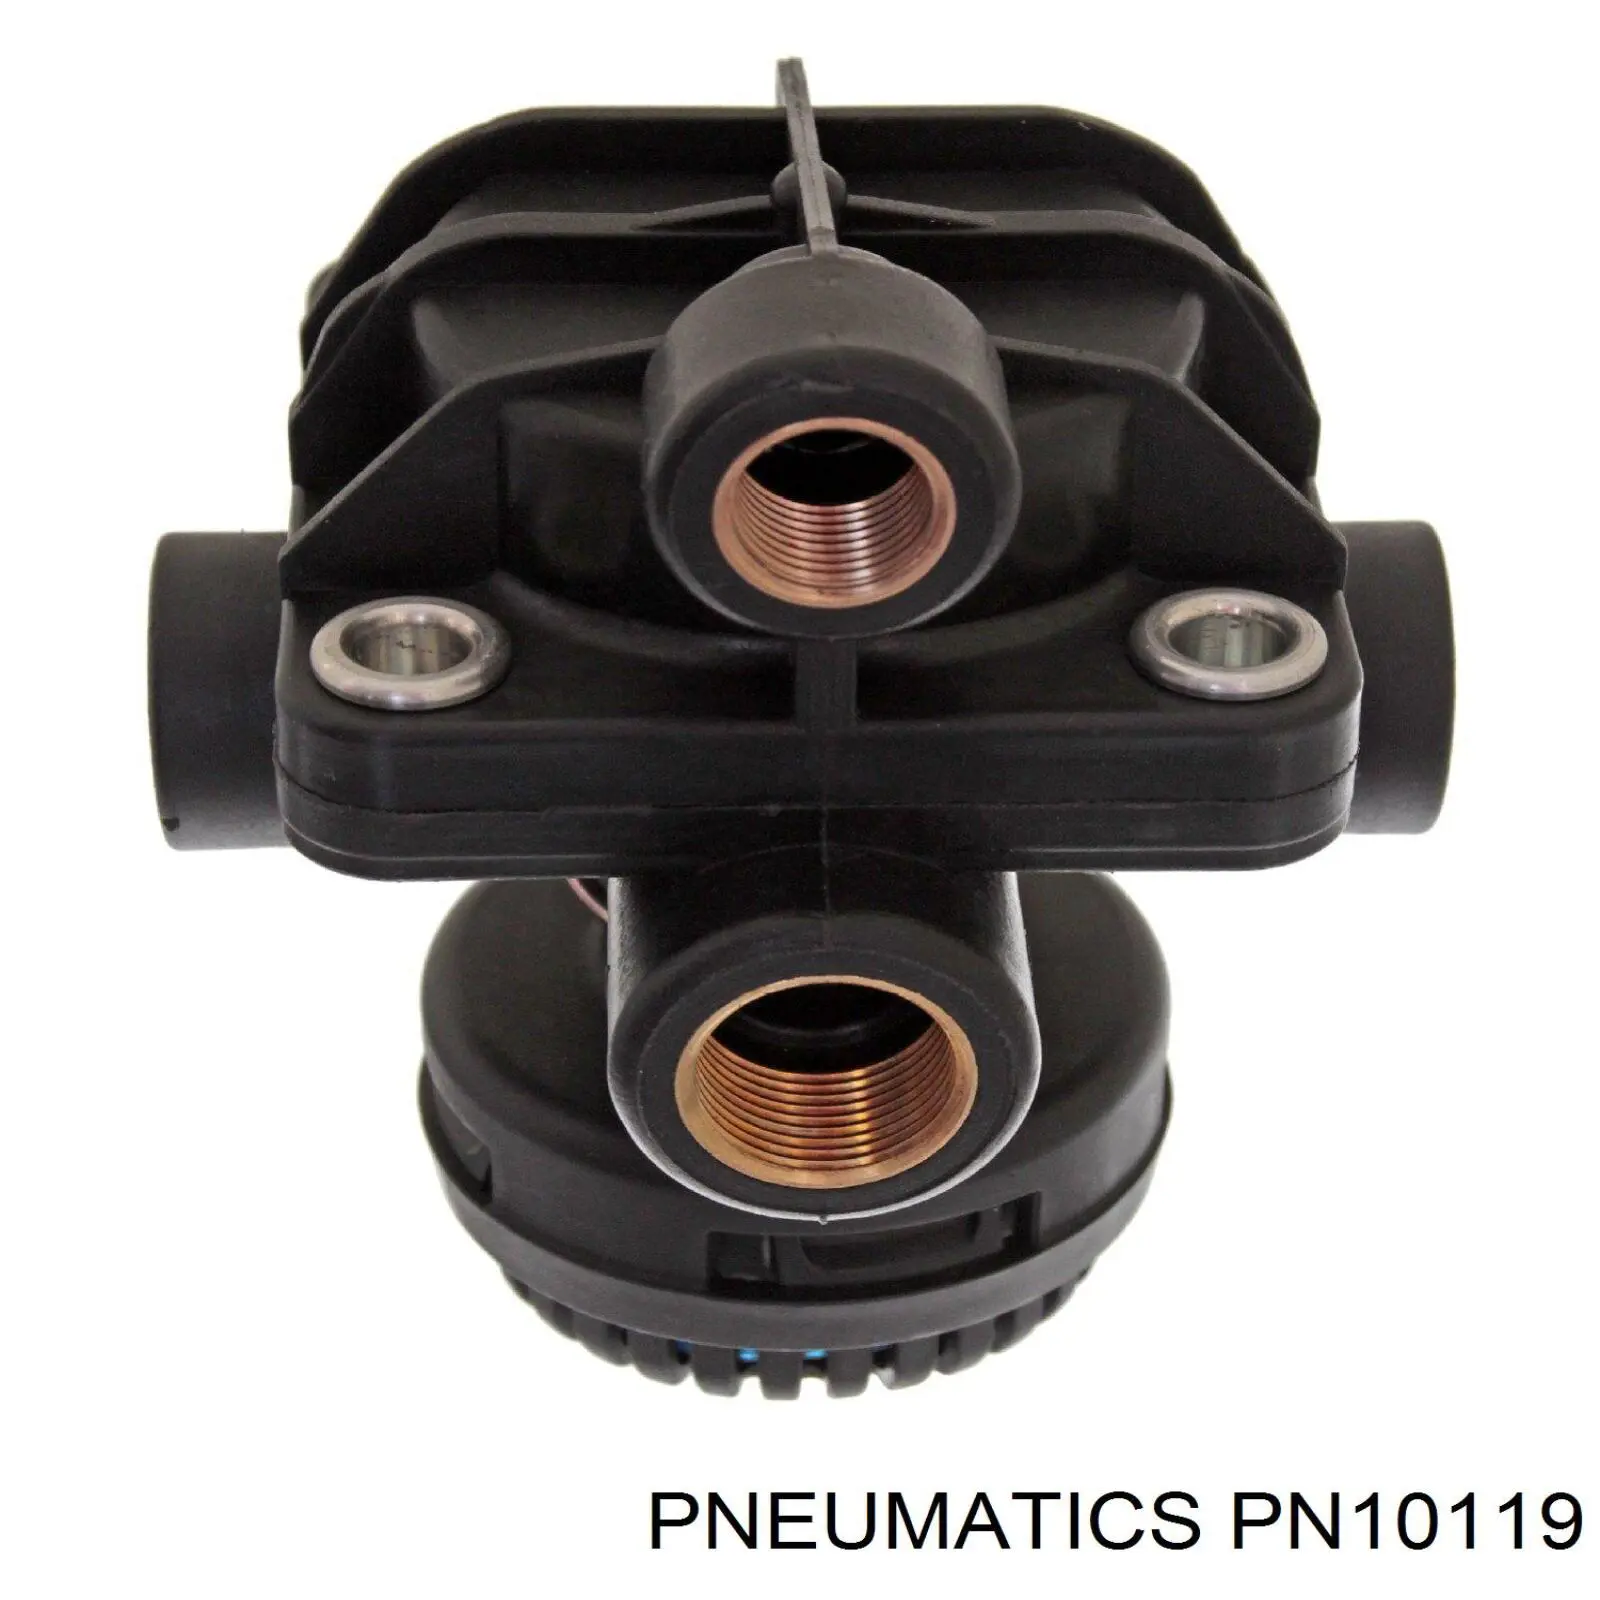 PN10119 Pneumatics válvula de relé